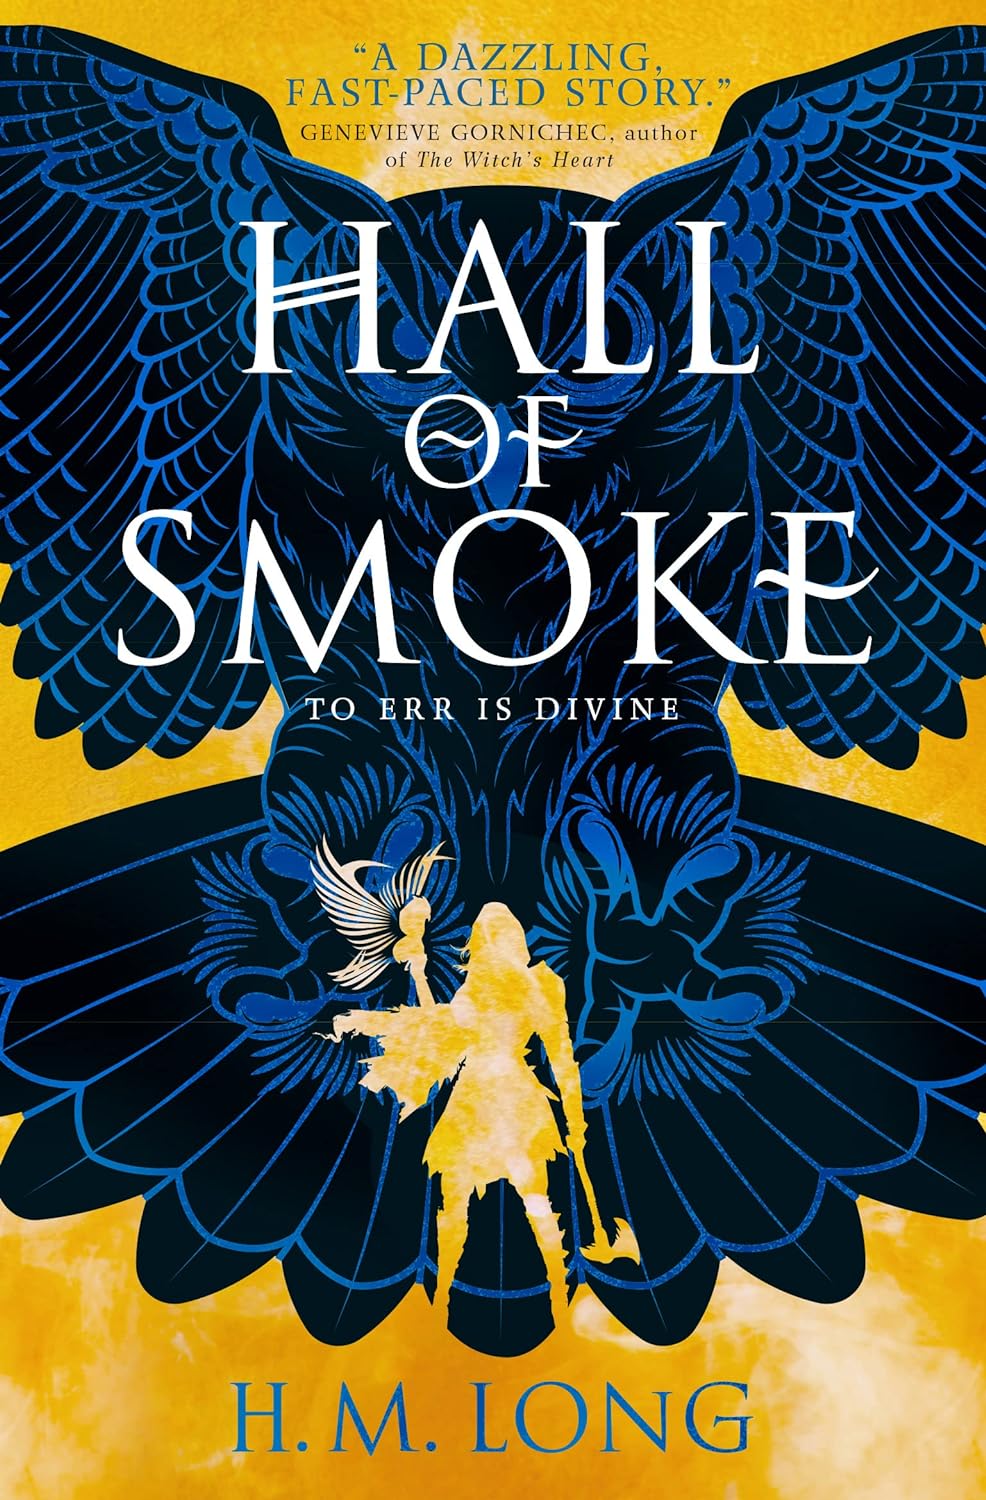 H.M. Long: Hall of Smoke (2021, Titan Books)